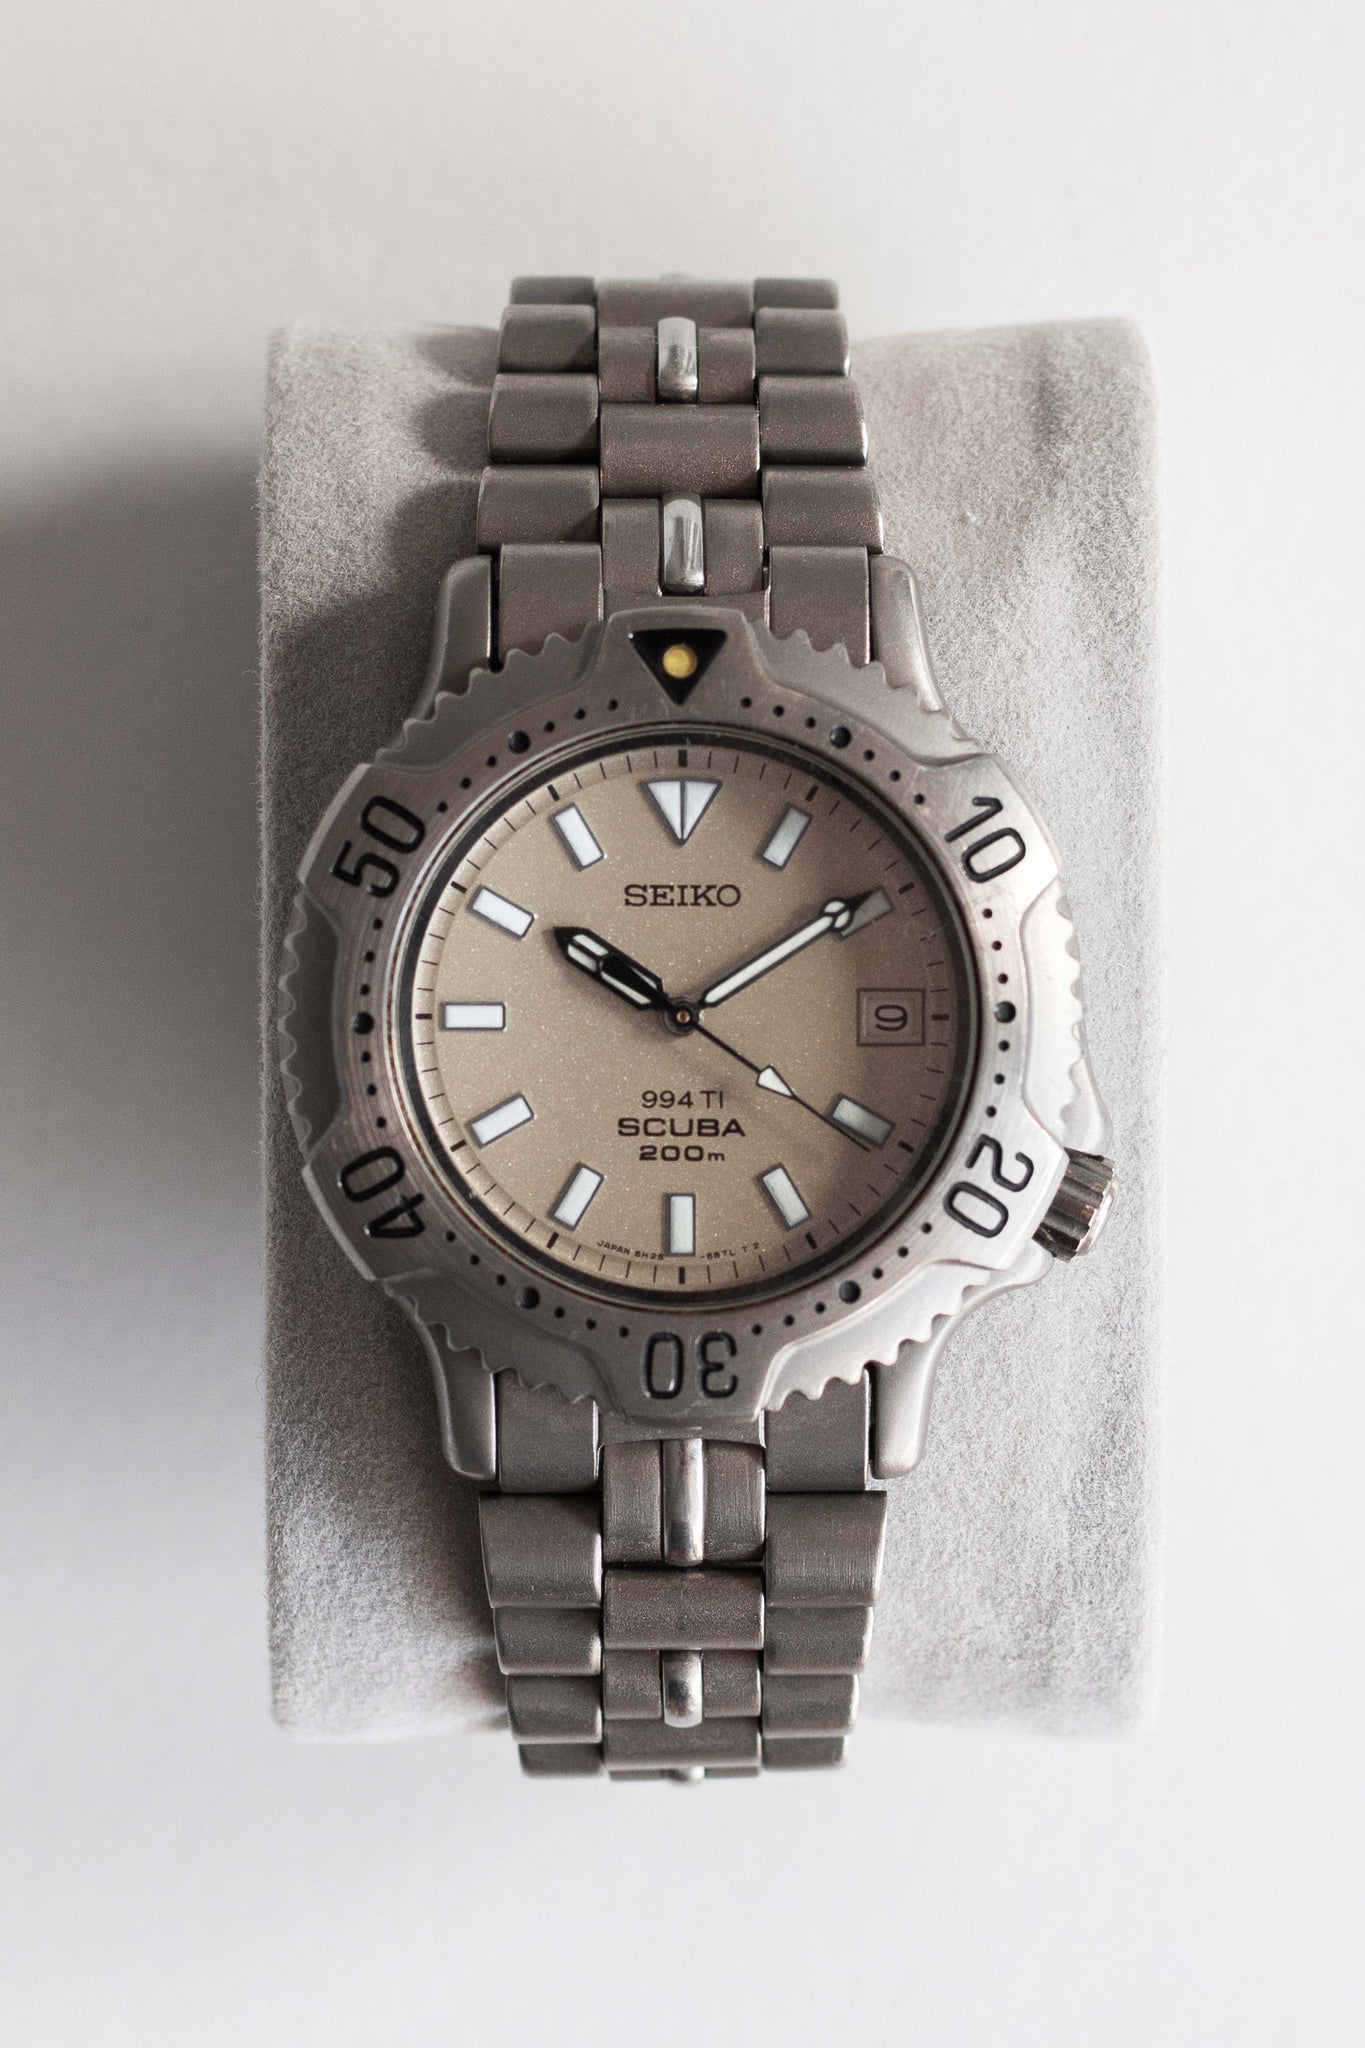 Seiko 994 TI SBBM015 Ref. 5H25-6C10 1992 | Vintage & Pre-Owned Luxury  Watches – Wynn & Thayne